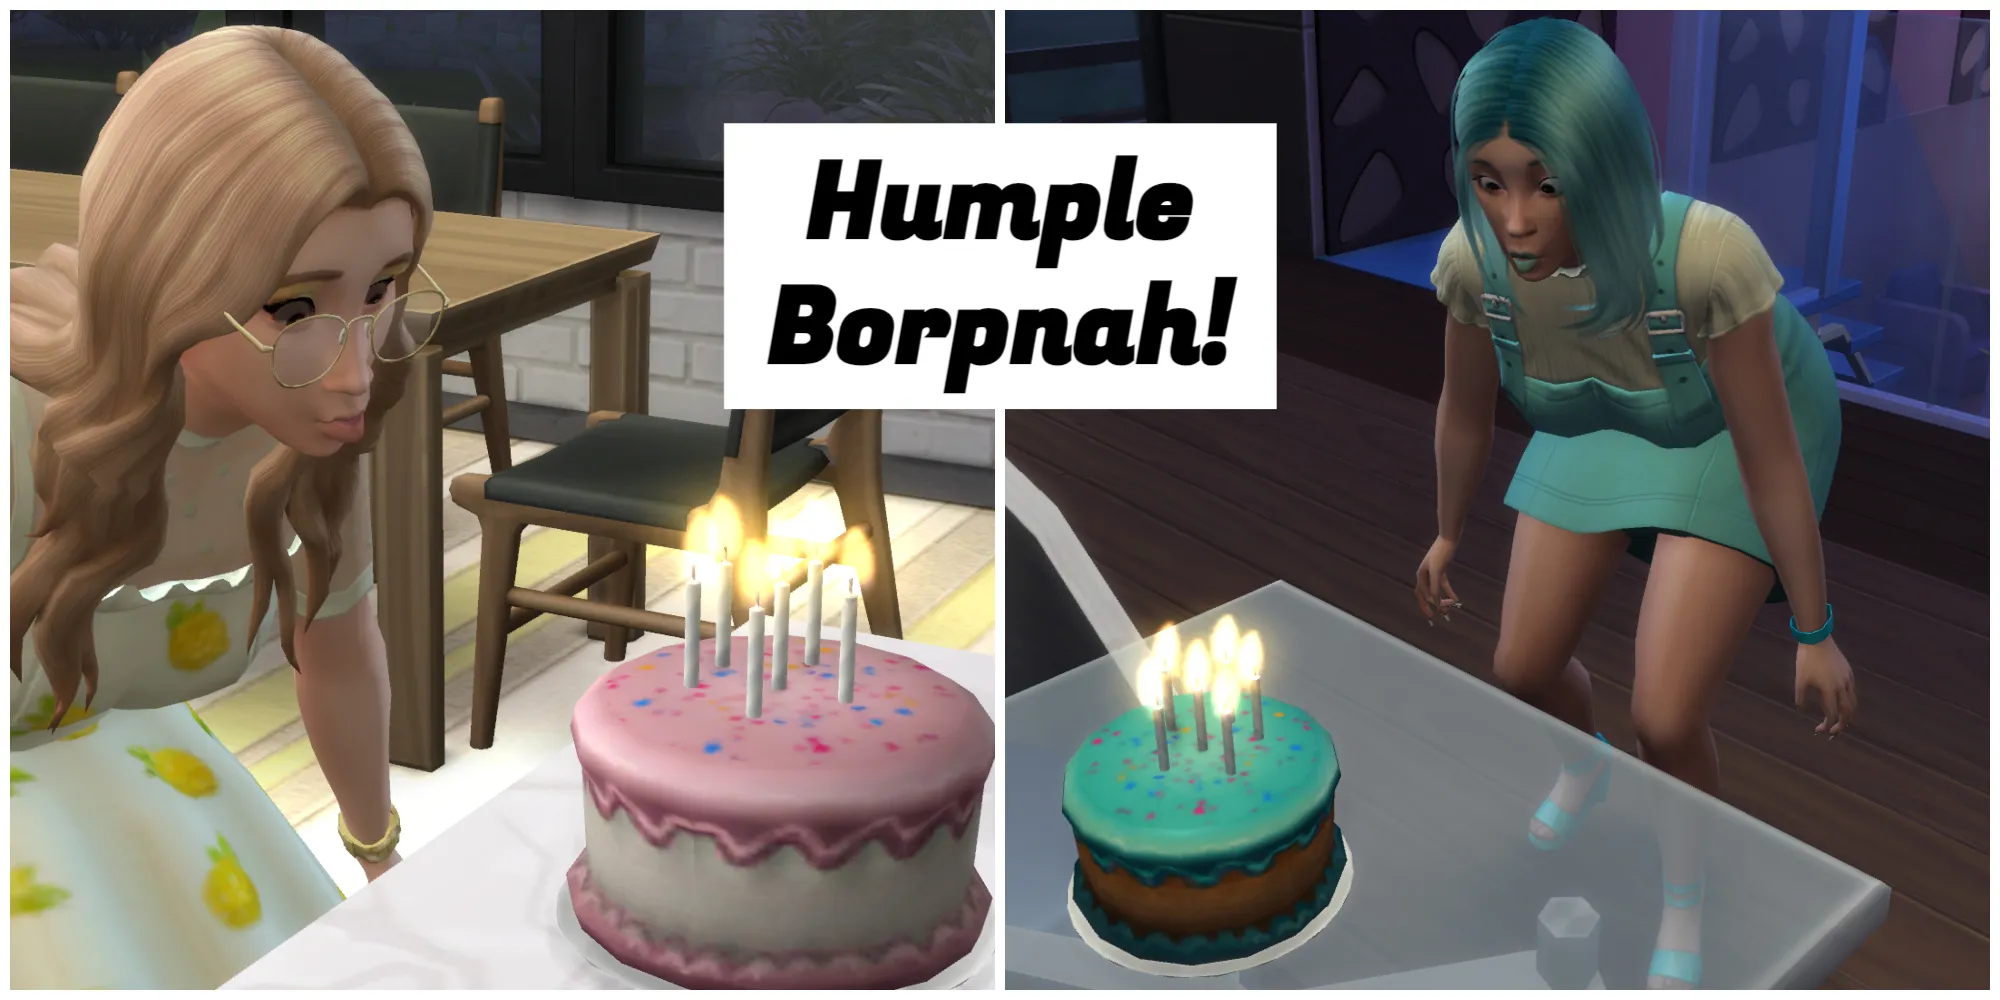 I Sims cantano Humple Borpnah in Simlish per i loro compleanni